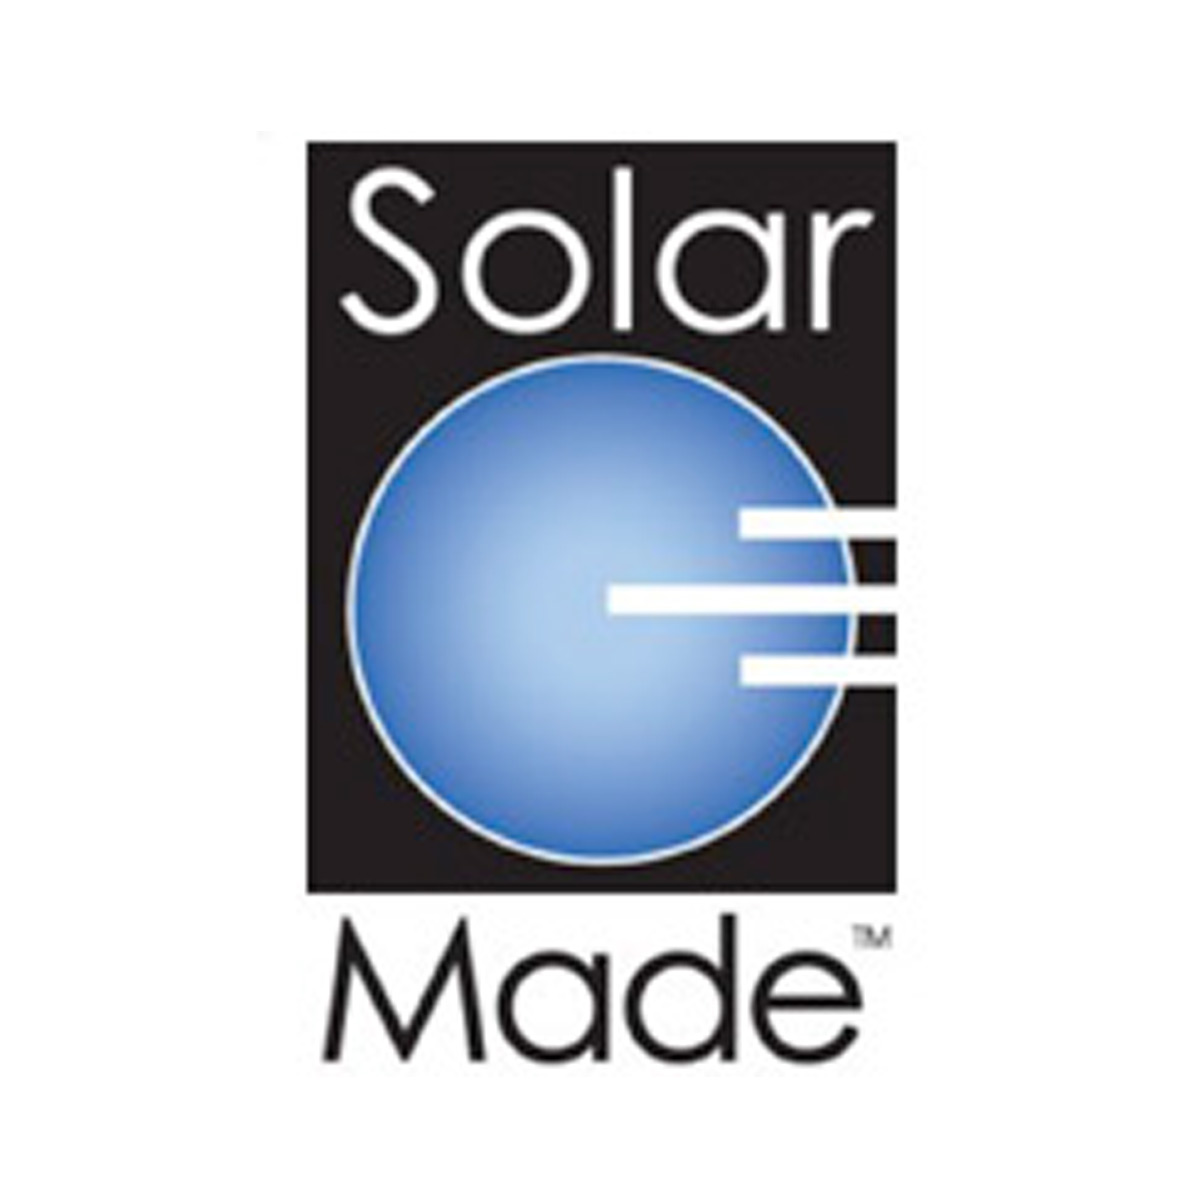 solar made